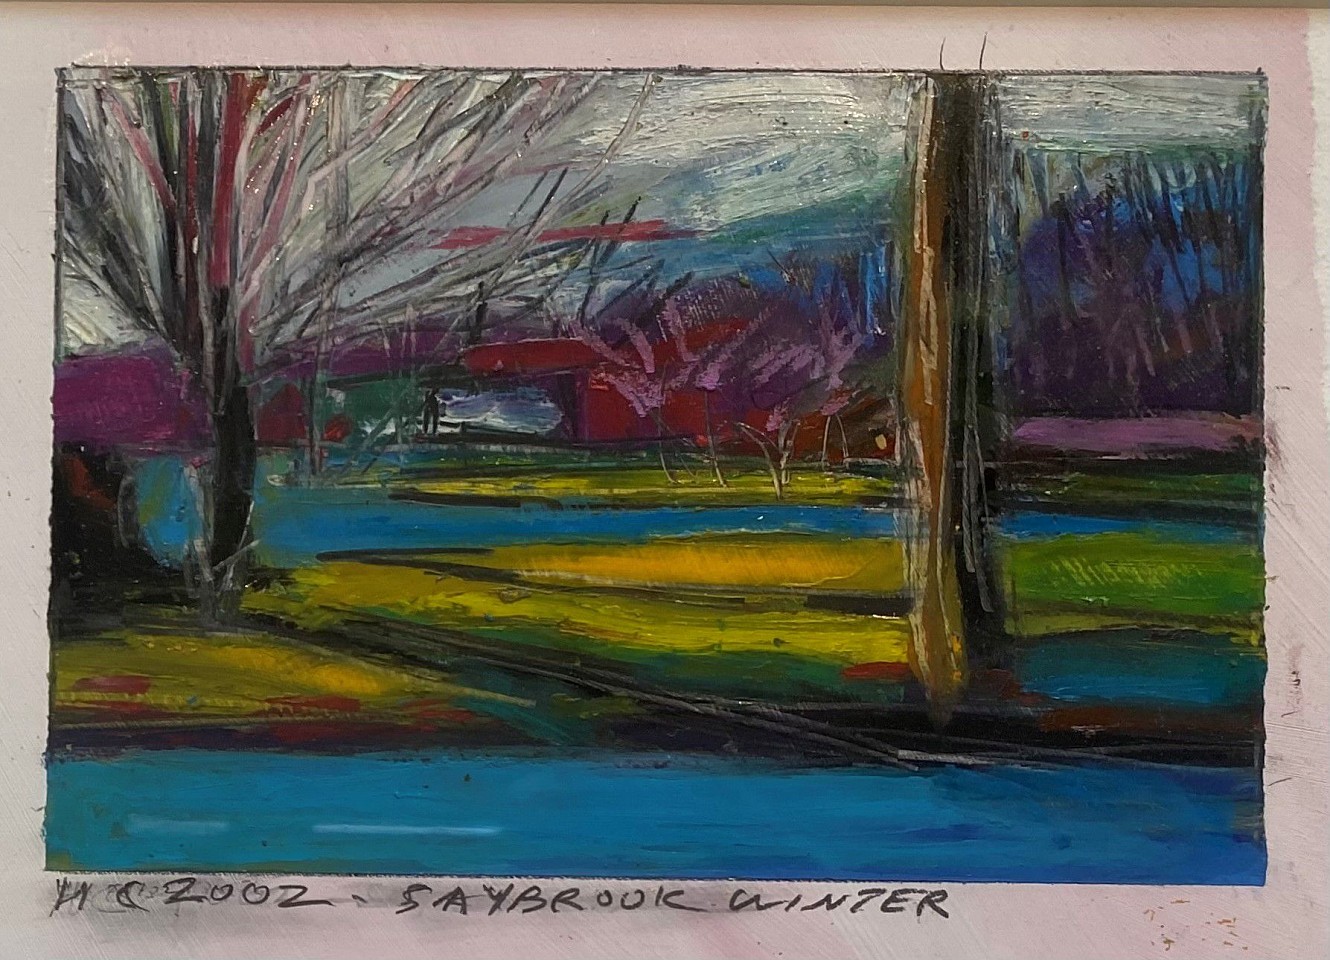 Helen Cantrell, Saybrook Winter
oil pastel on paper, 4"" x 6""
HC1221.02
$250